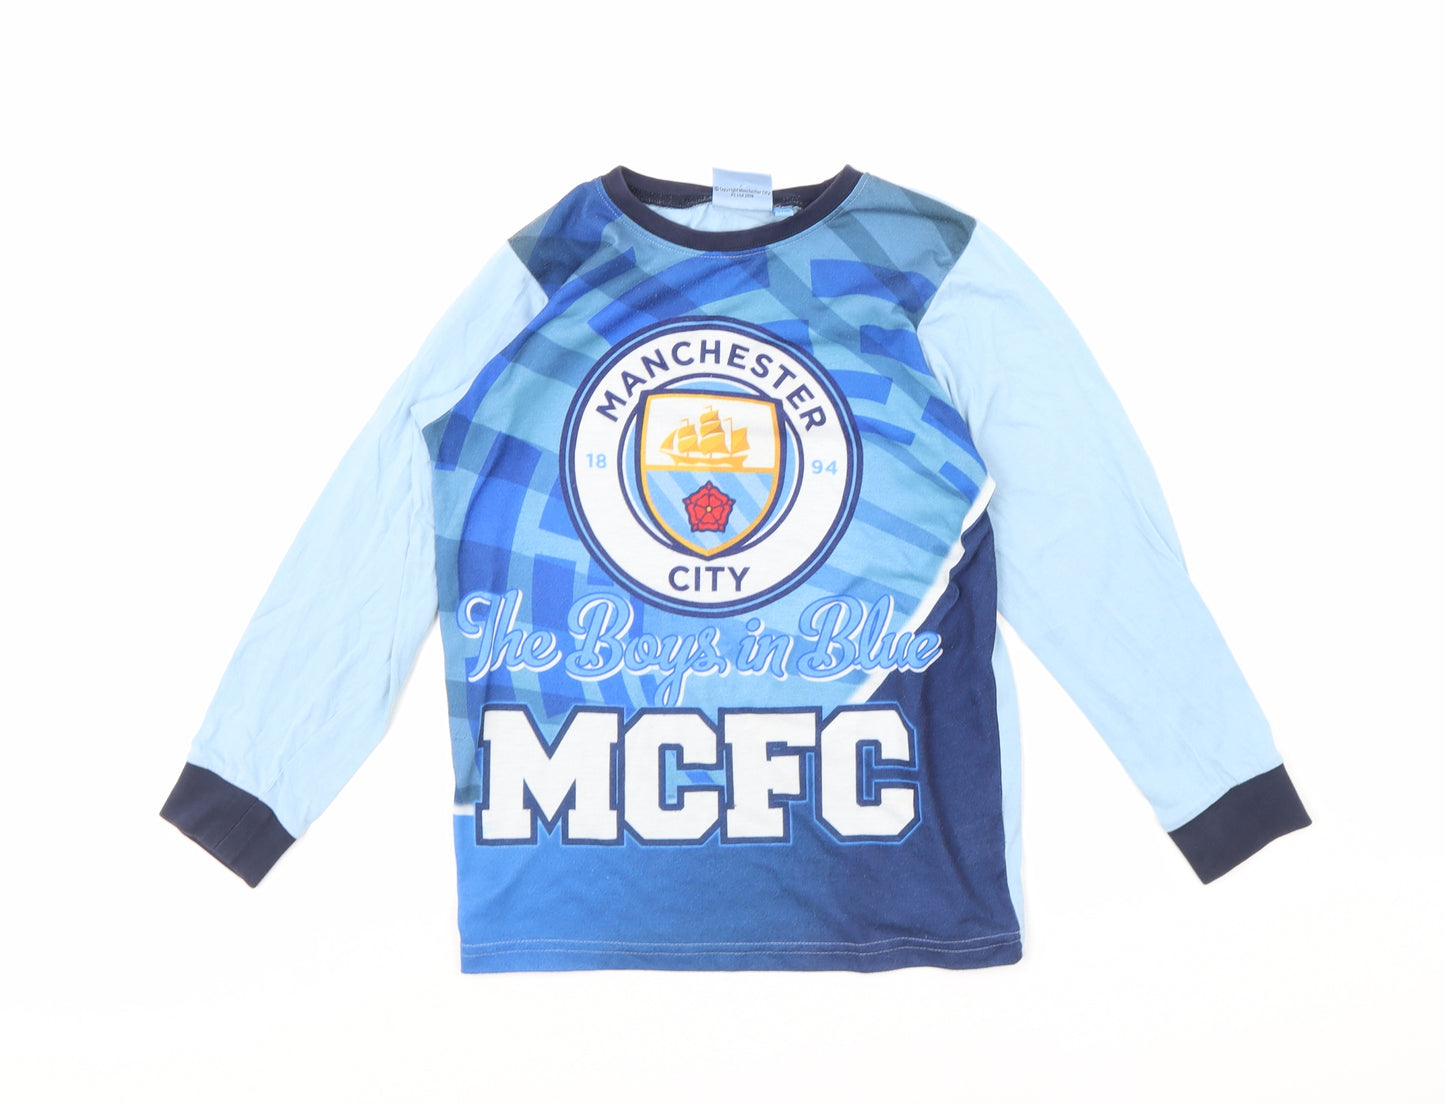 Manchester City FC Boys Blue   Basic T-Shirt Size 9 Years  - Manchester City Football Club